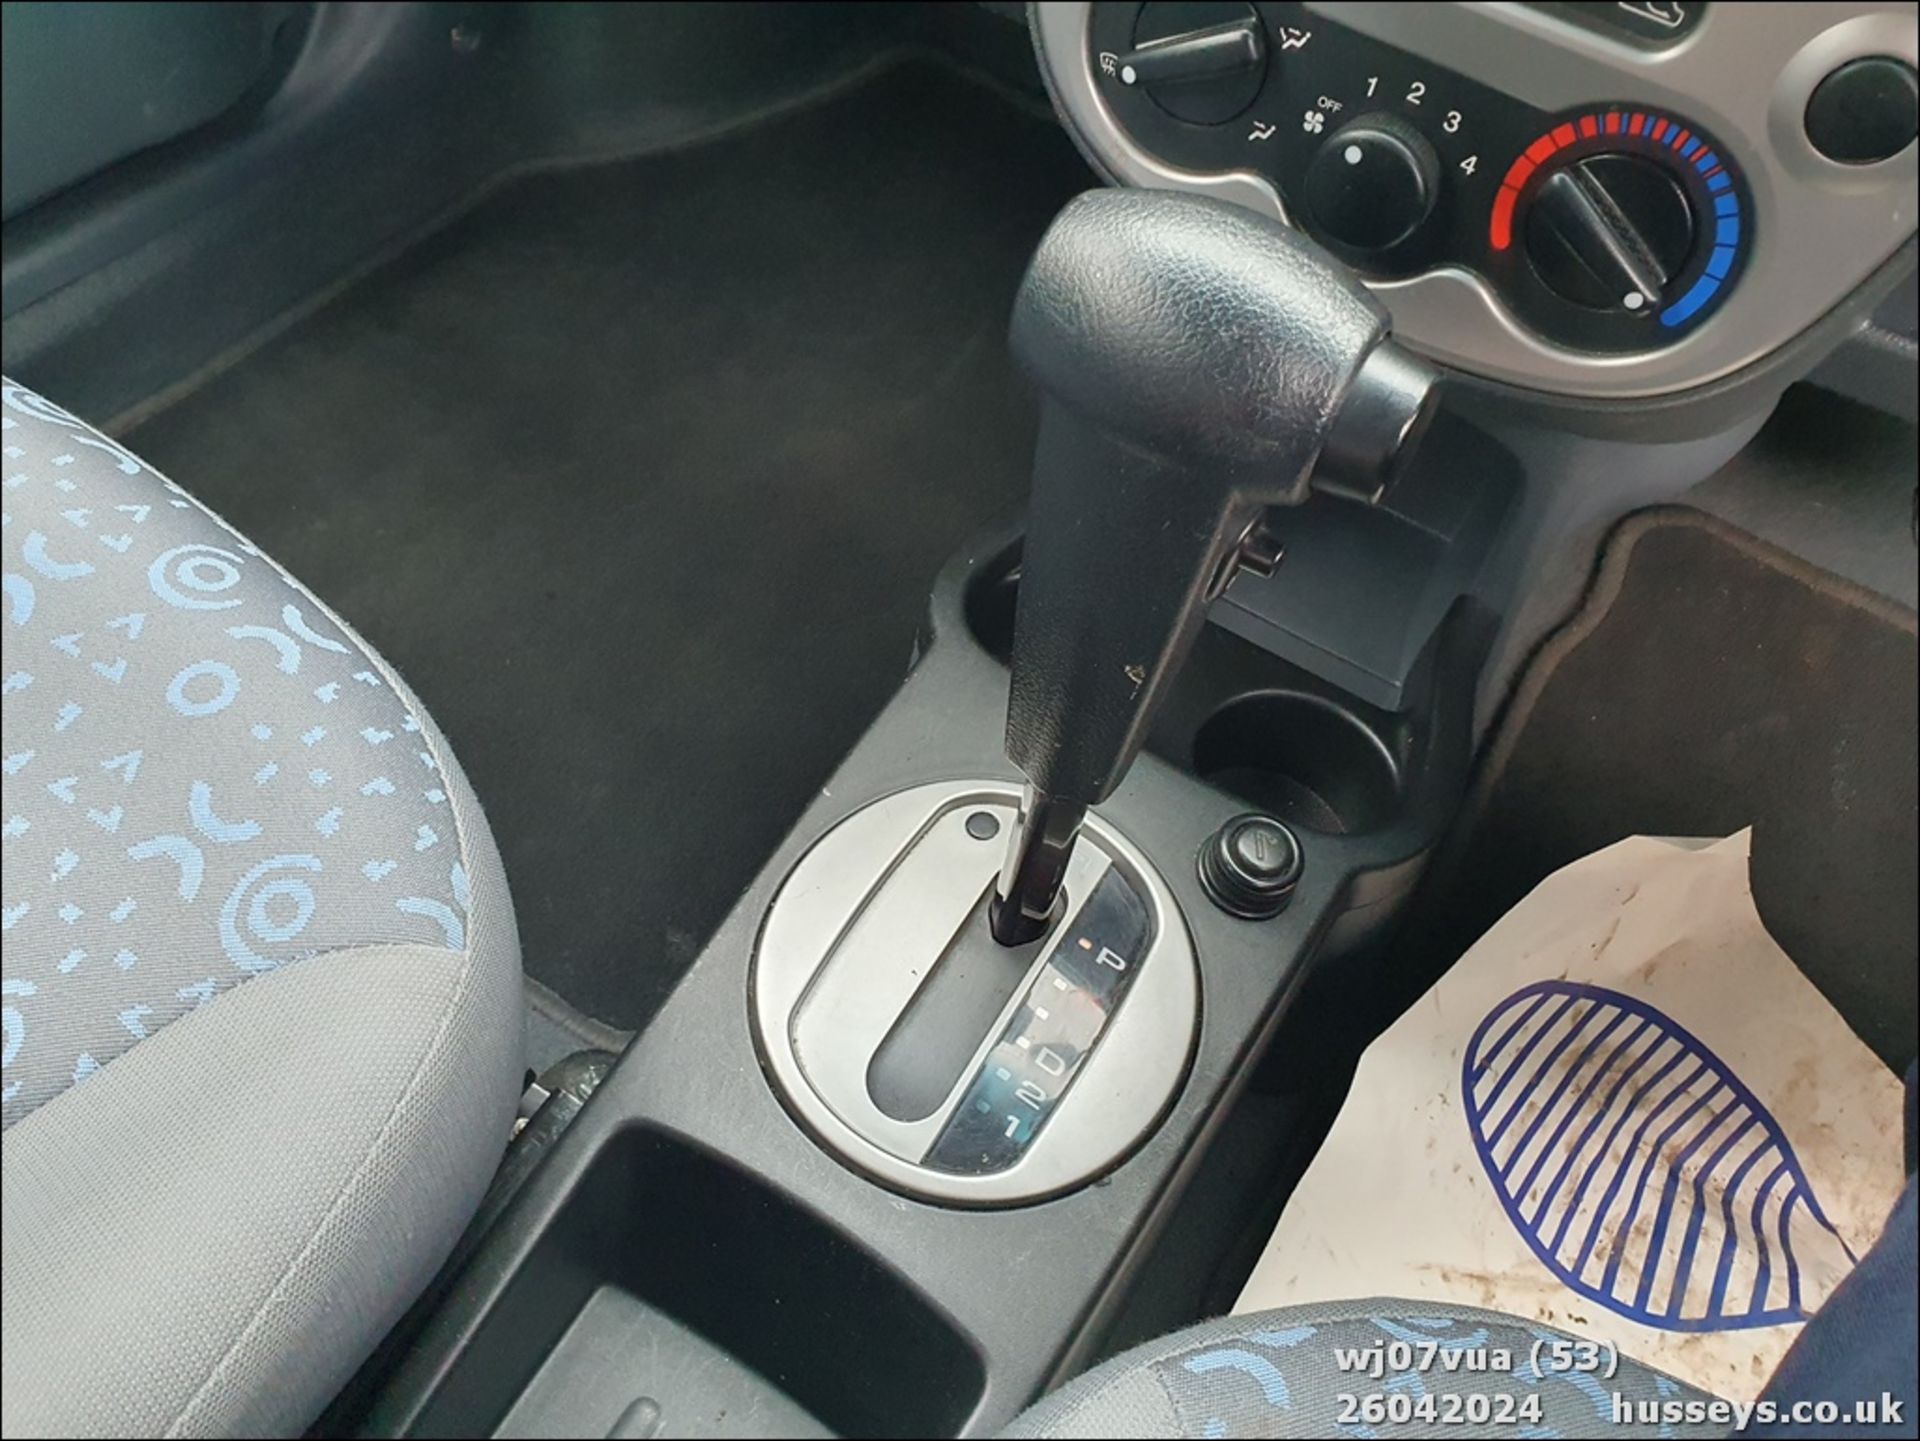 07/07 CHEVROLET MATIZ SE AUTO - 796cc 5dr Hatchback (Blue, 36k) - Image 54 of 56